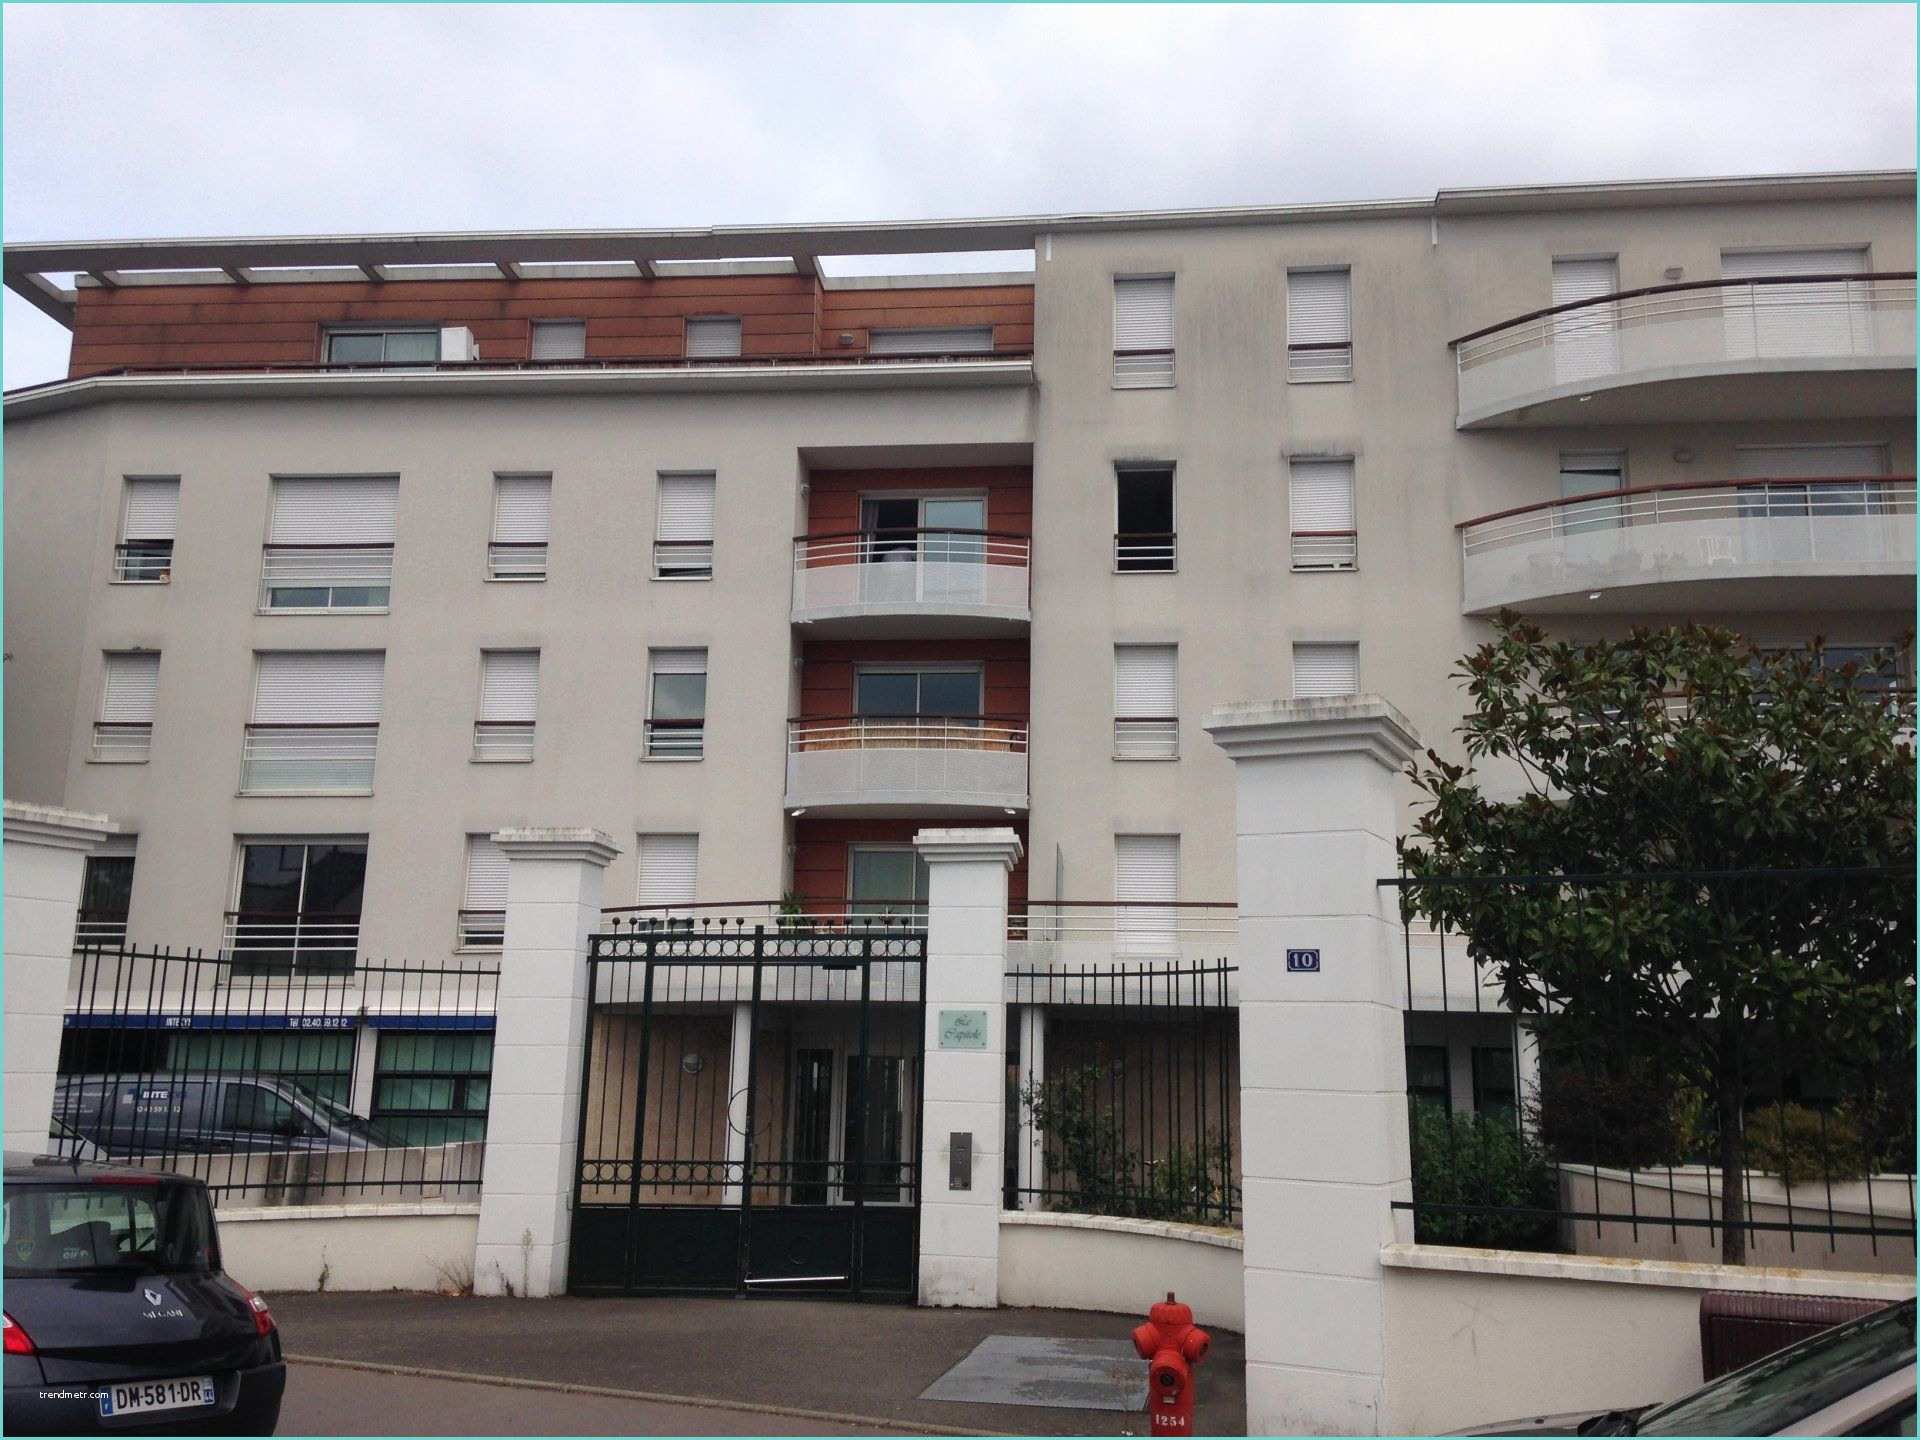 Location Appartement Nantes Centre Ville Particulier T2 Terrasse Loquidy